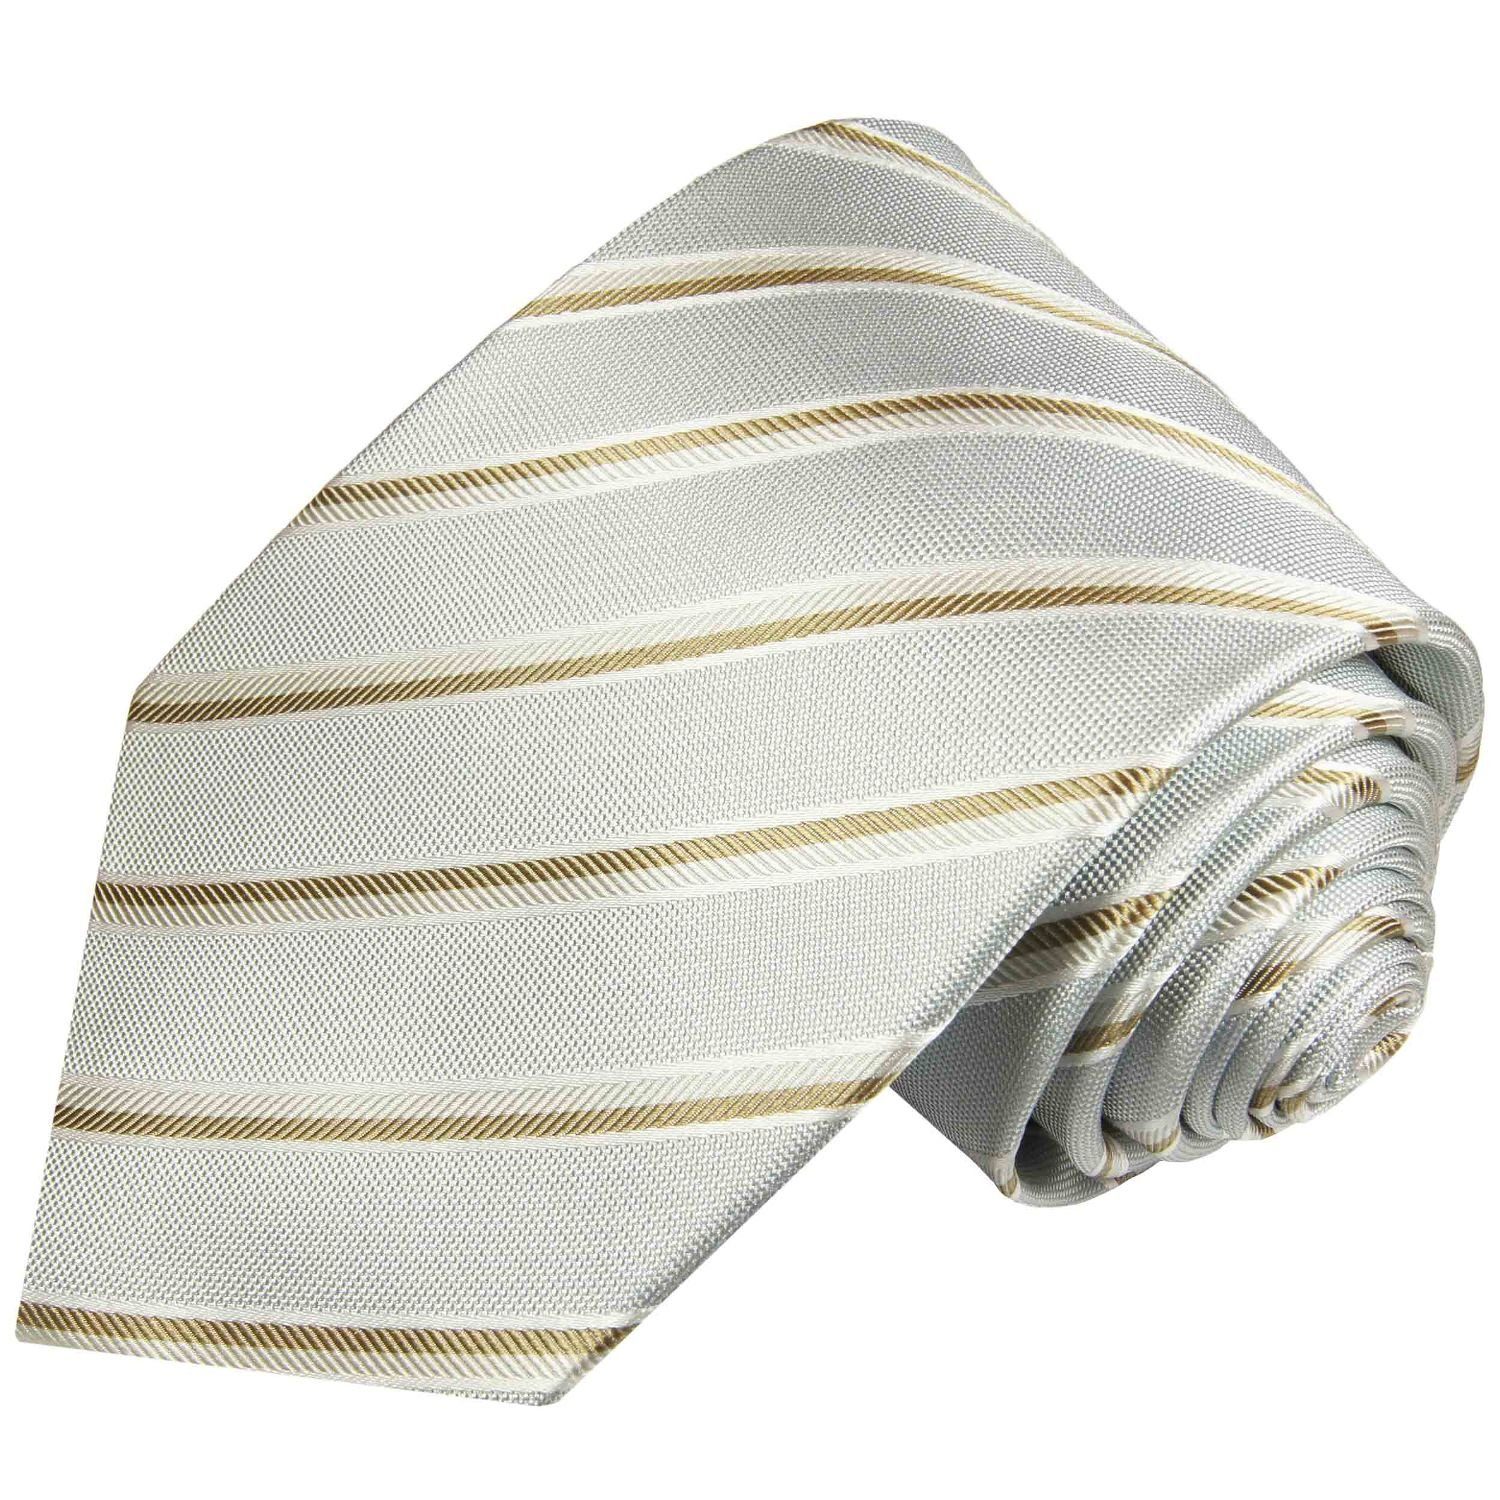 Paul Malone Krawatte Designer Seidenkrawatte Herren Schlips modern gestreift 100% Seide Schmal (6cm), hellblau gold 720